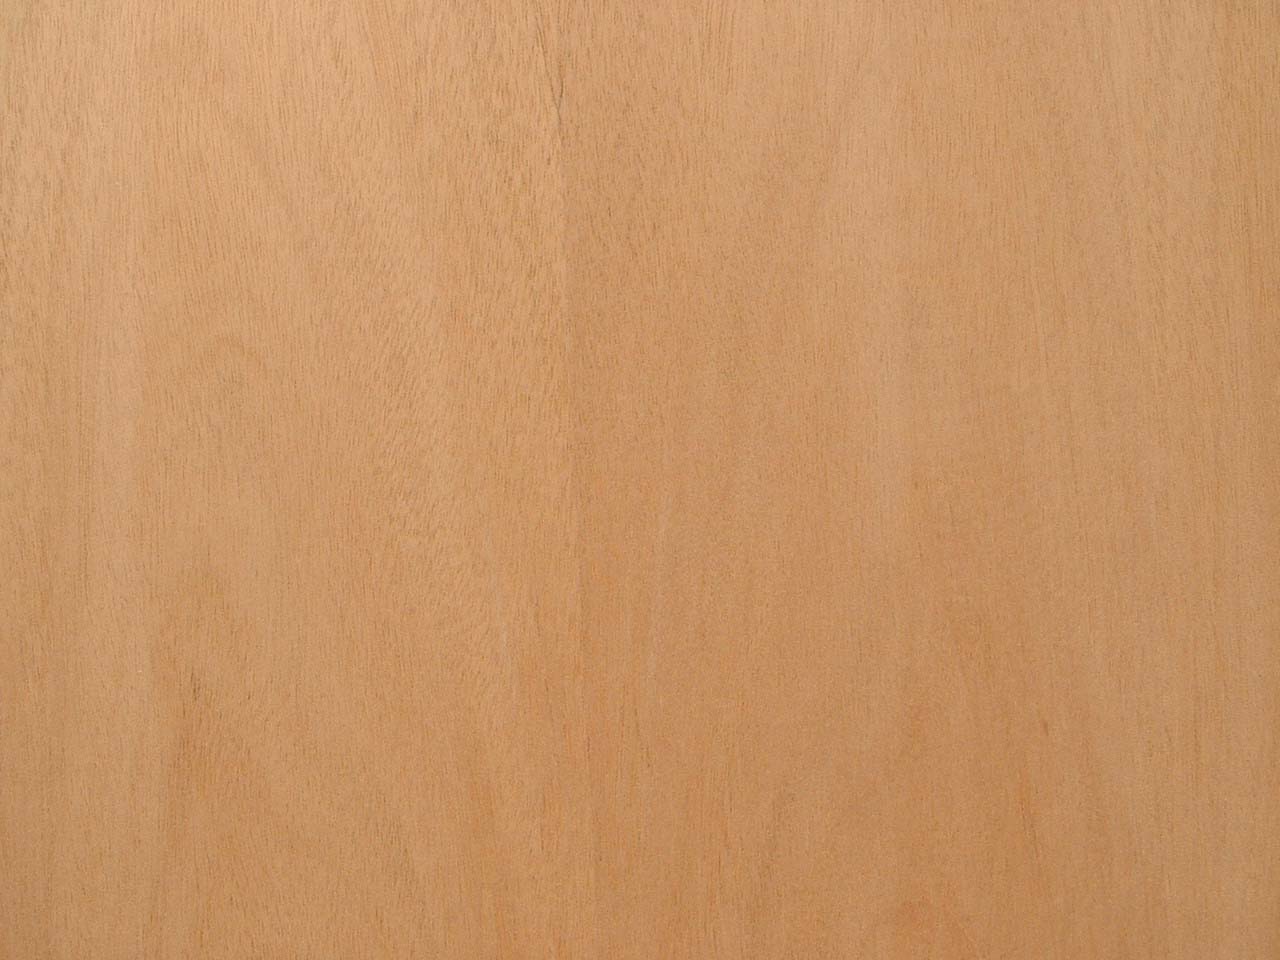 48" x 96" White Maple Veneer Plain Sliced Wood on Wood Backer Backing 4' X 8' 